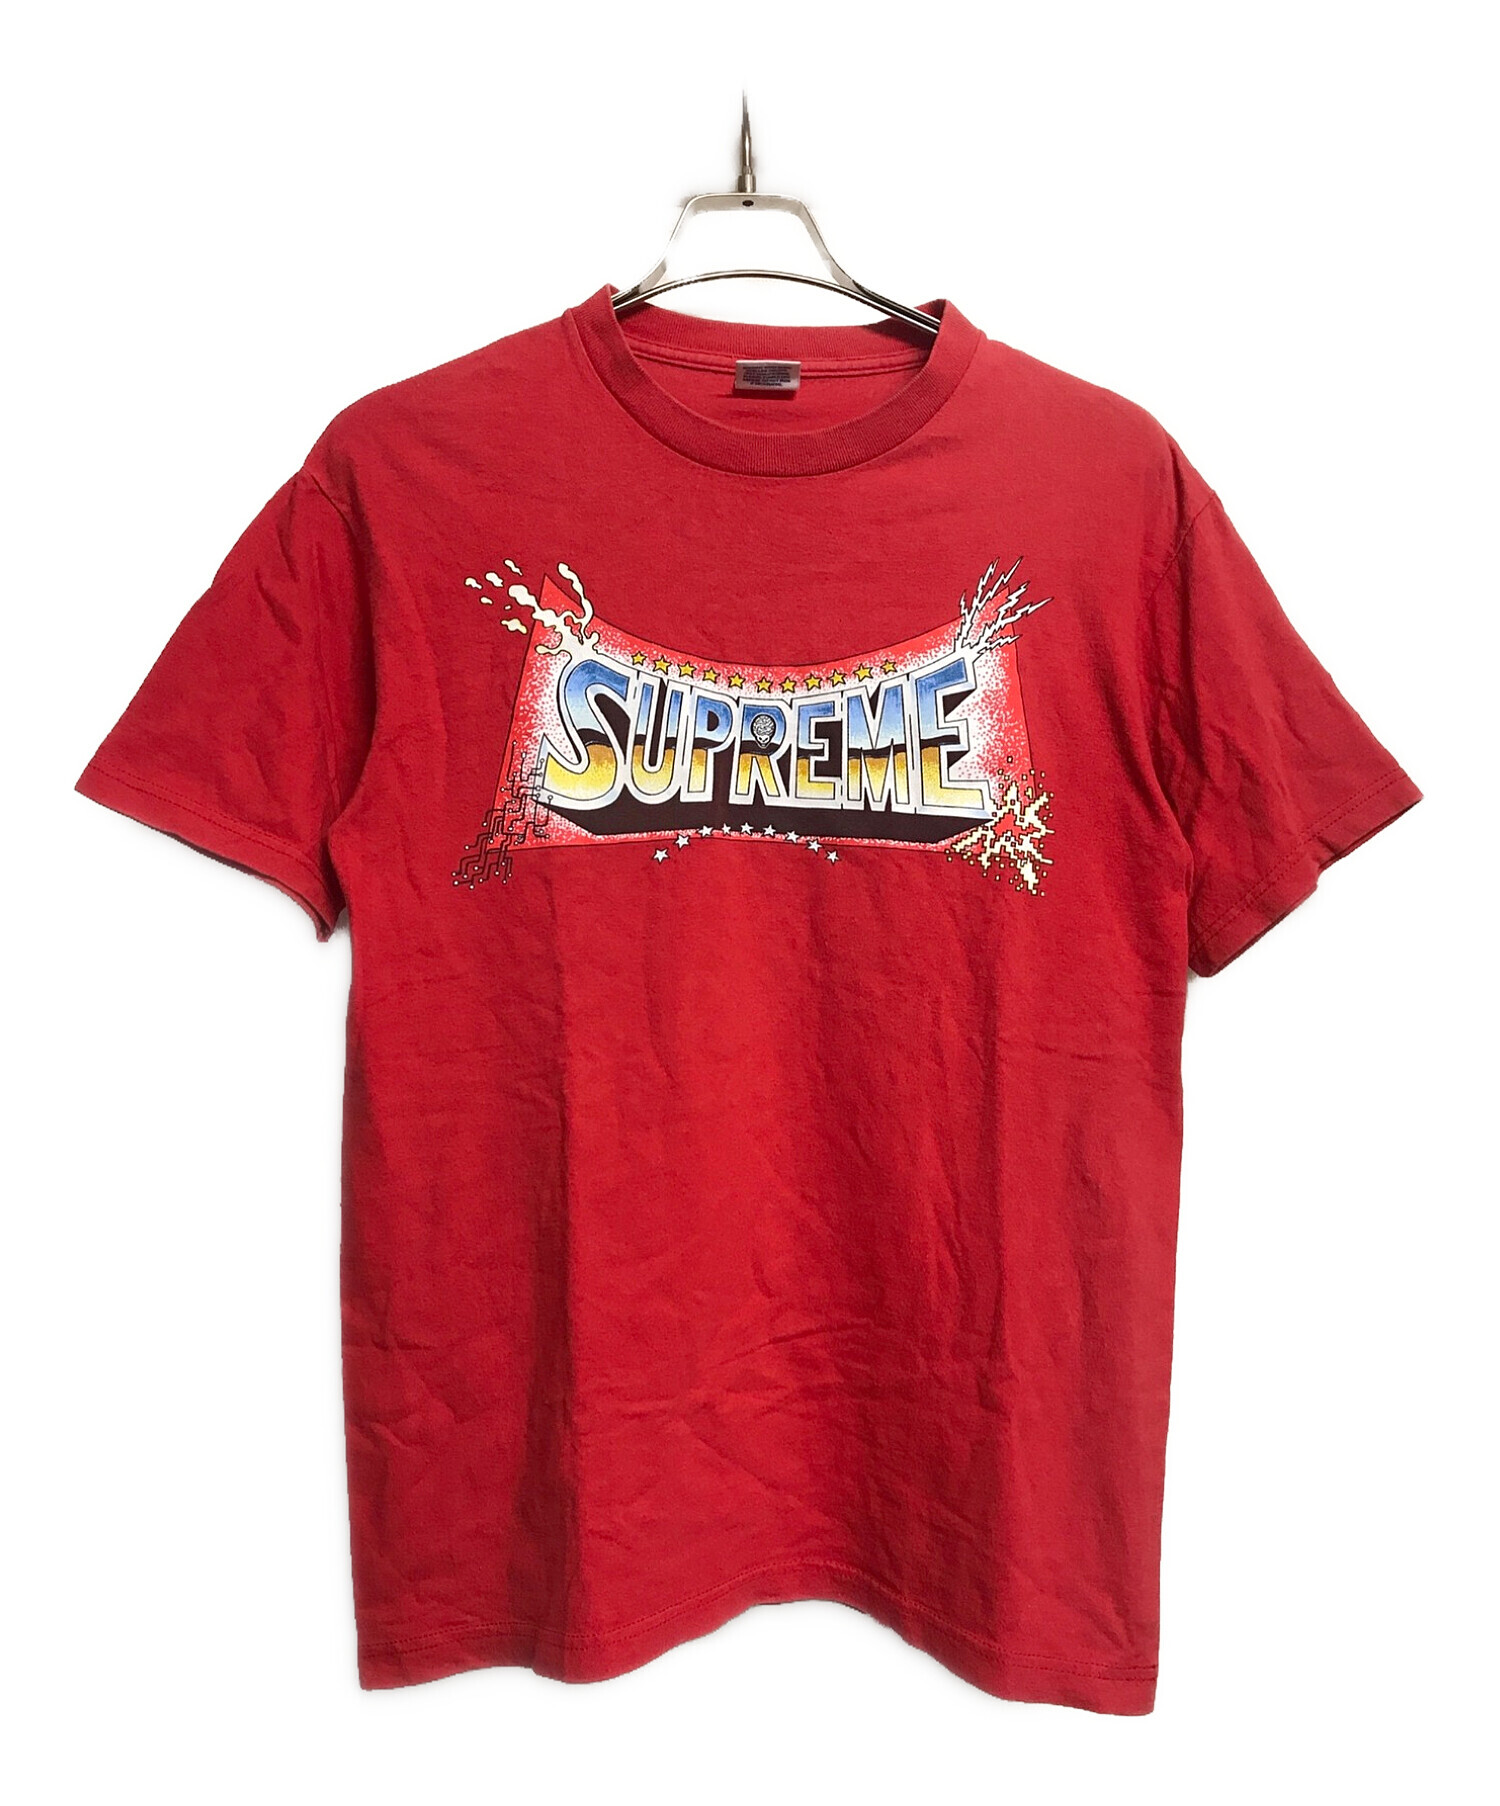 Supreme×Pedro Bell (シュプリーム×ペドロベル) Tシャツ レッド サイズ:M